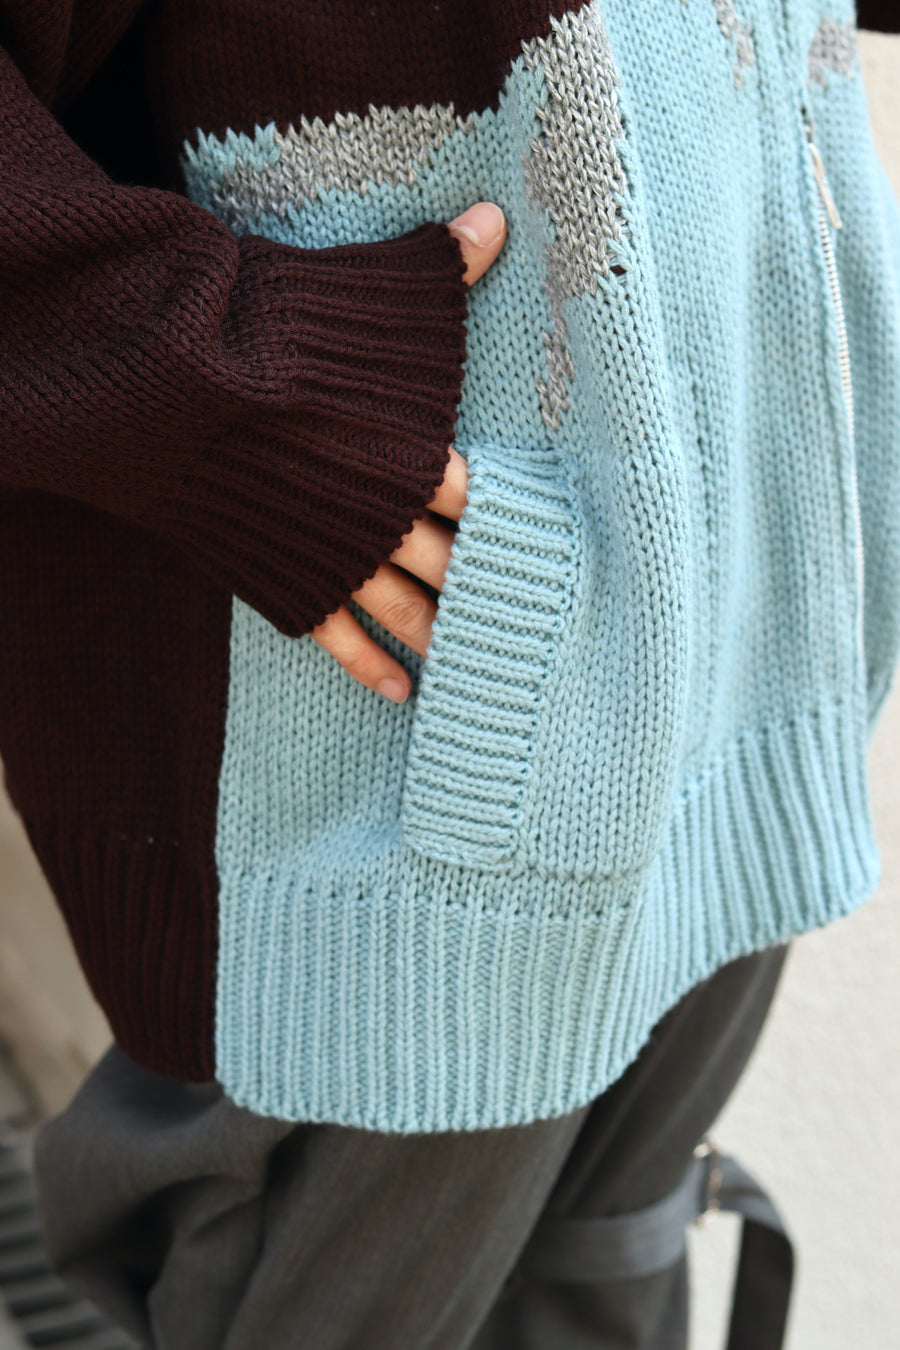 elephant TRIBAL fabrics William Cowichan sweater(BROWN)